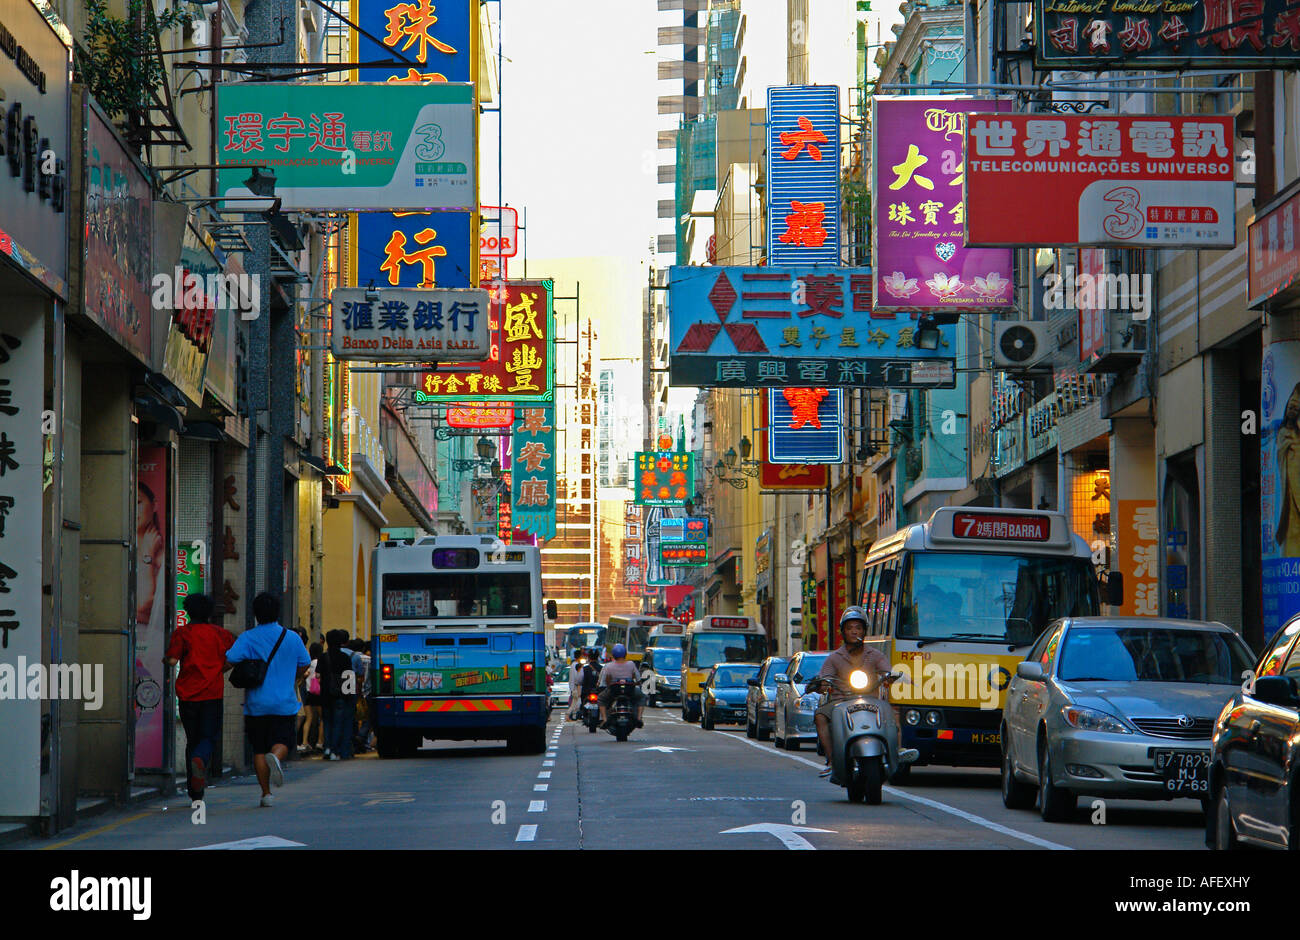 Avenida Almeida Ribeiro Street scene in Macau China Stock Photo